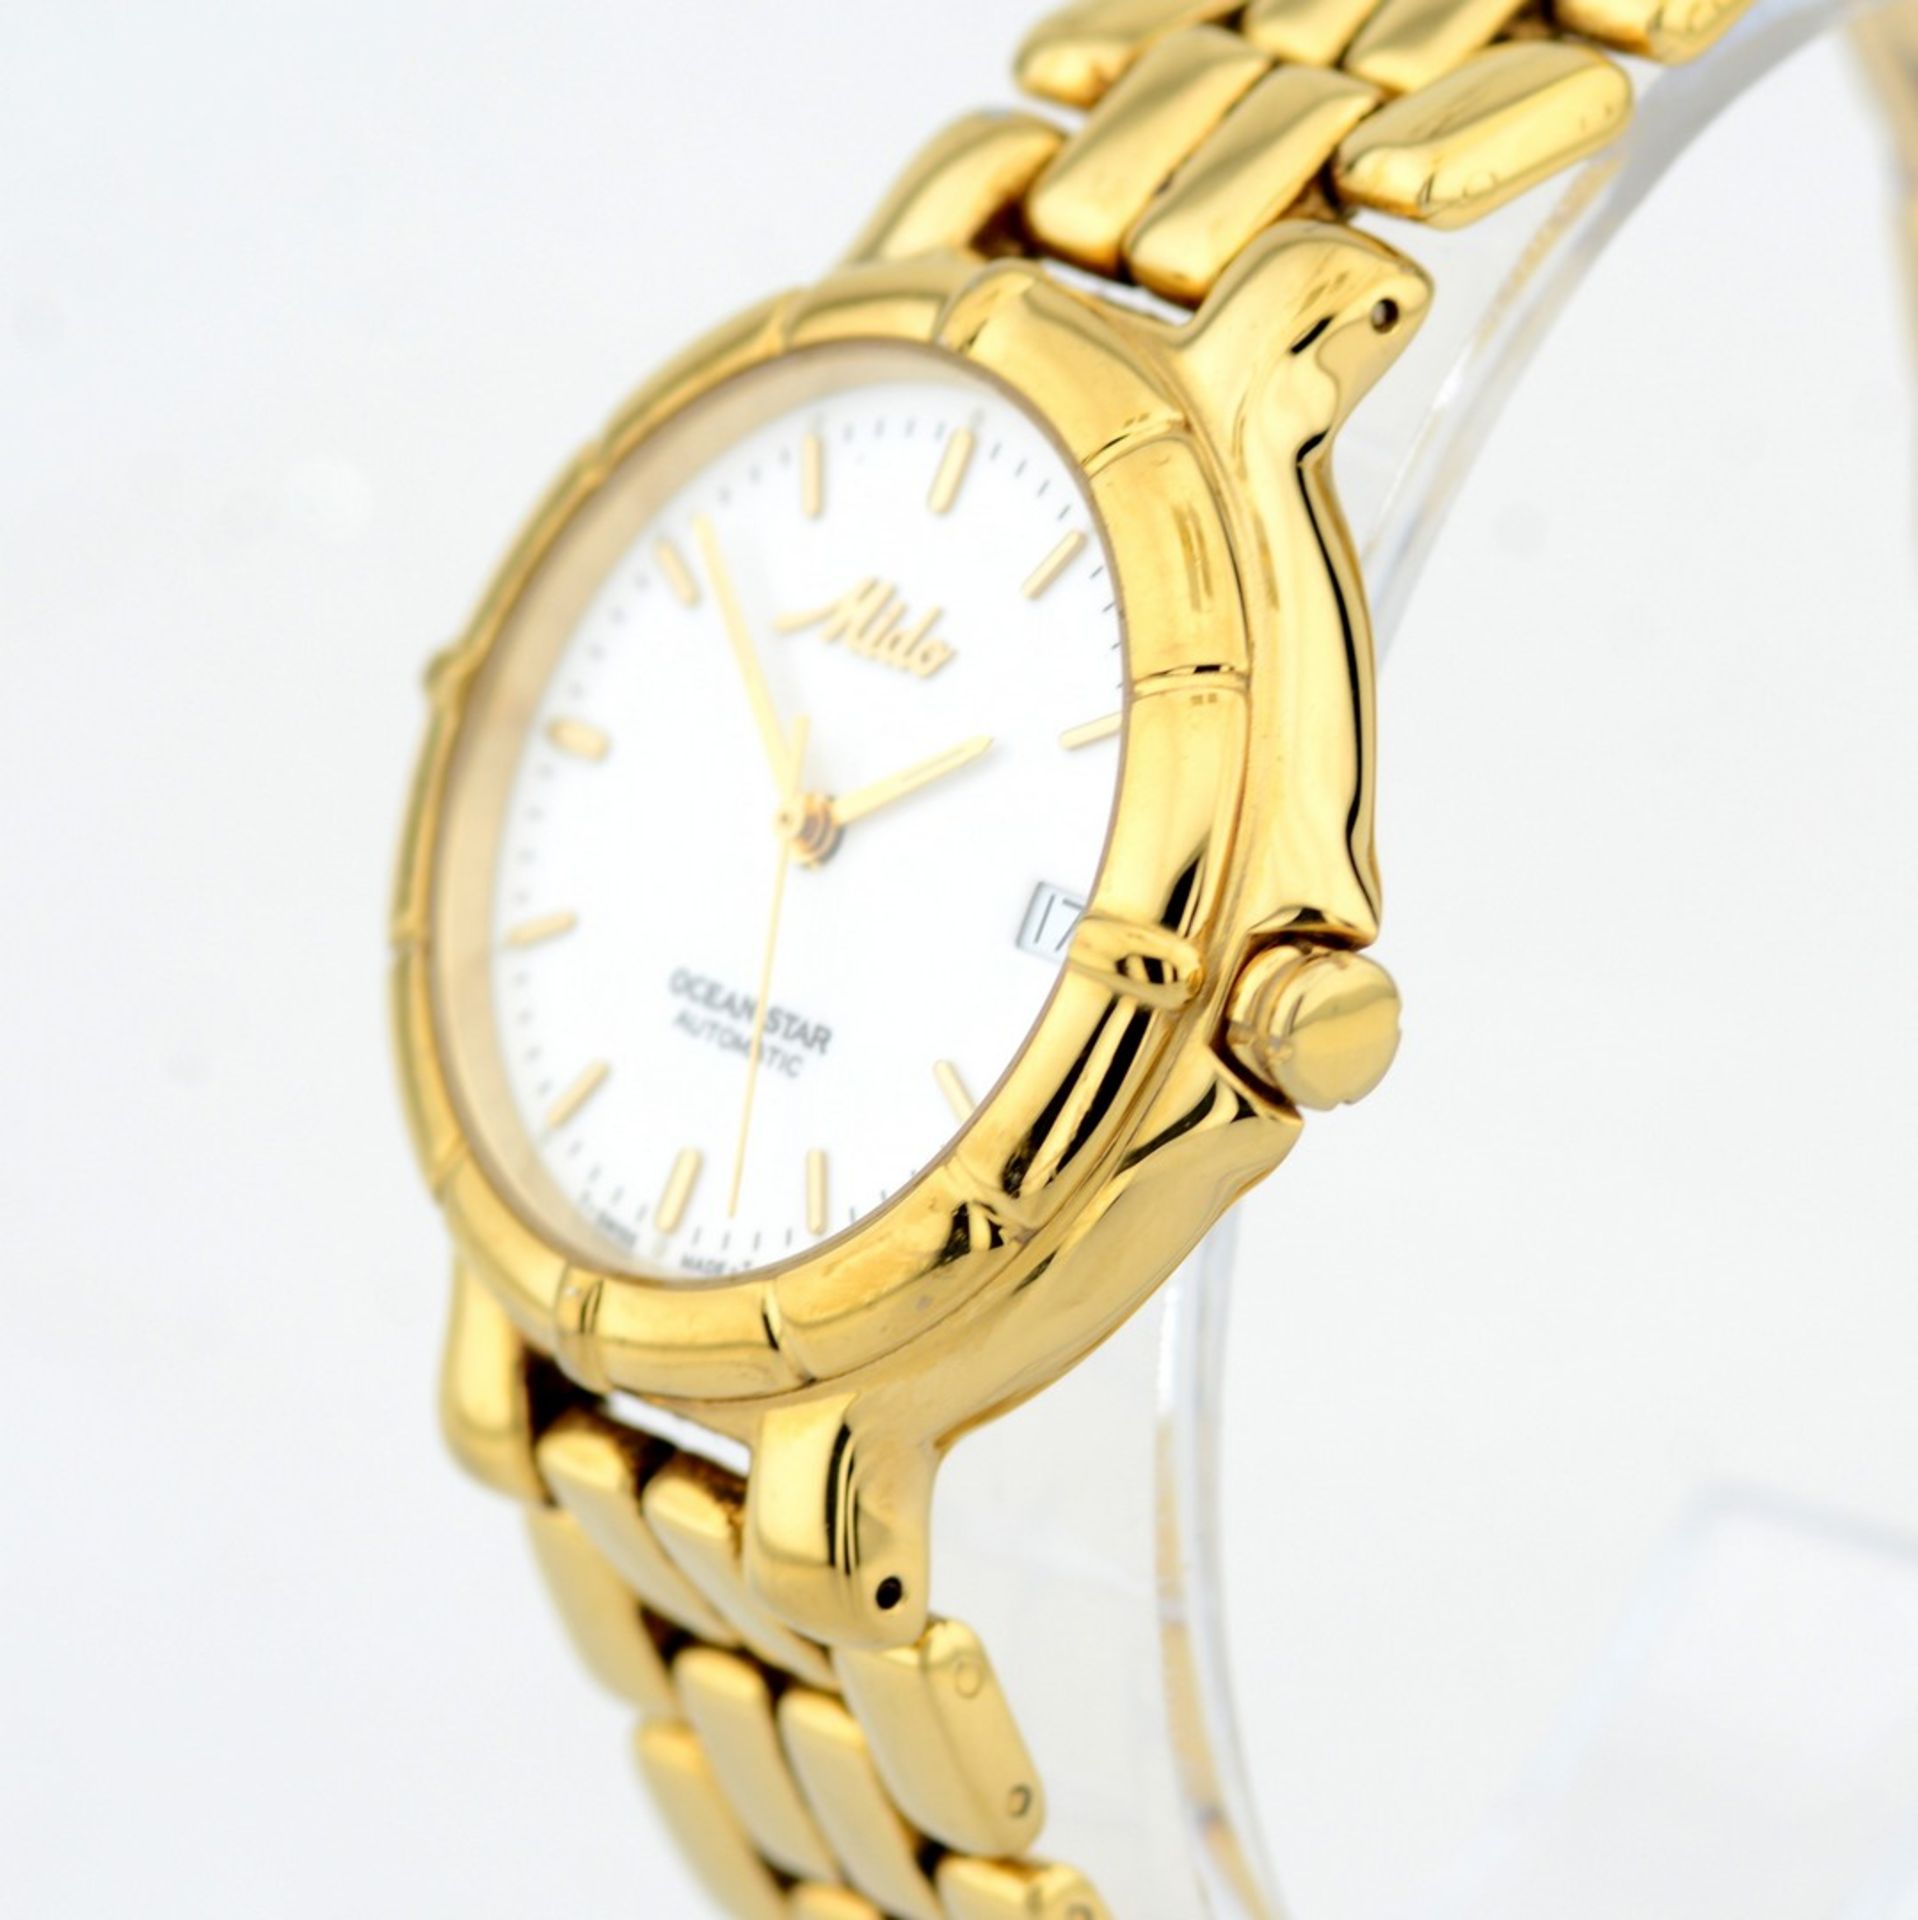 Mido / Ocean Star Automatic Date - Gentlmen's Gold-plated Wrist Watch - Image 2 of 6